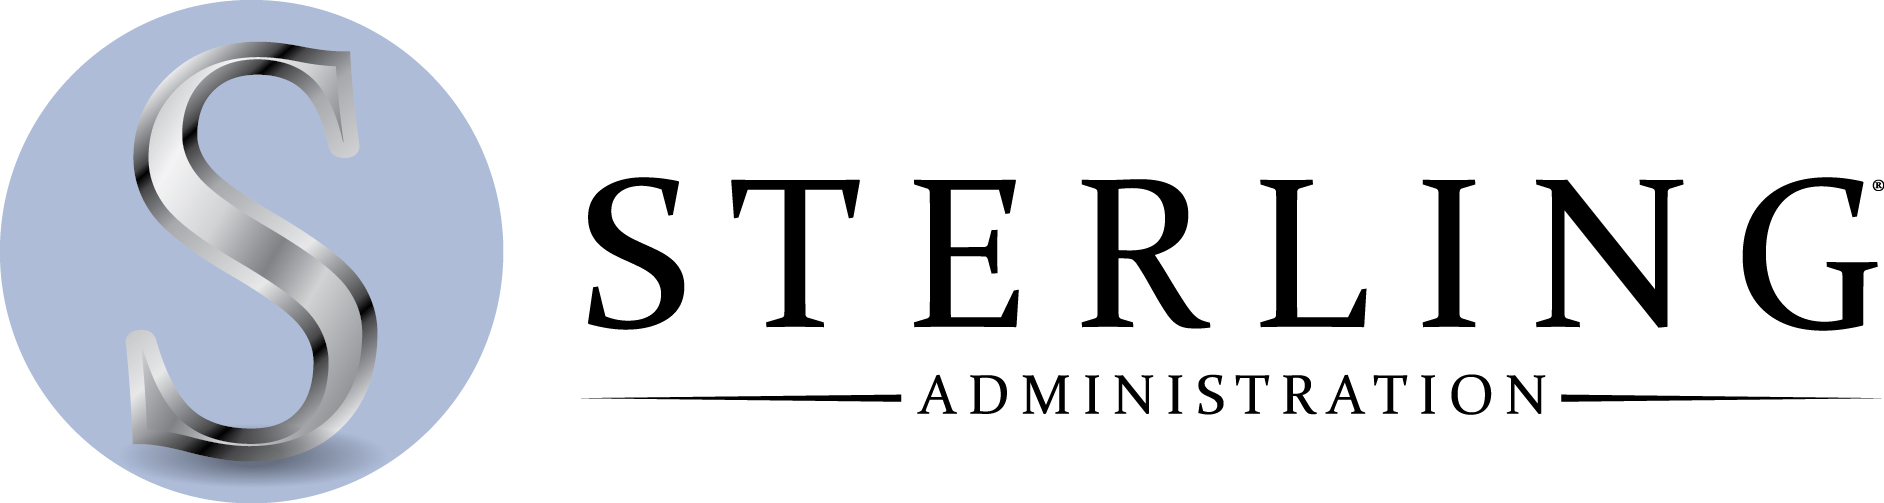 Sterling Administration logo